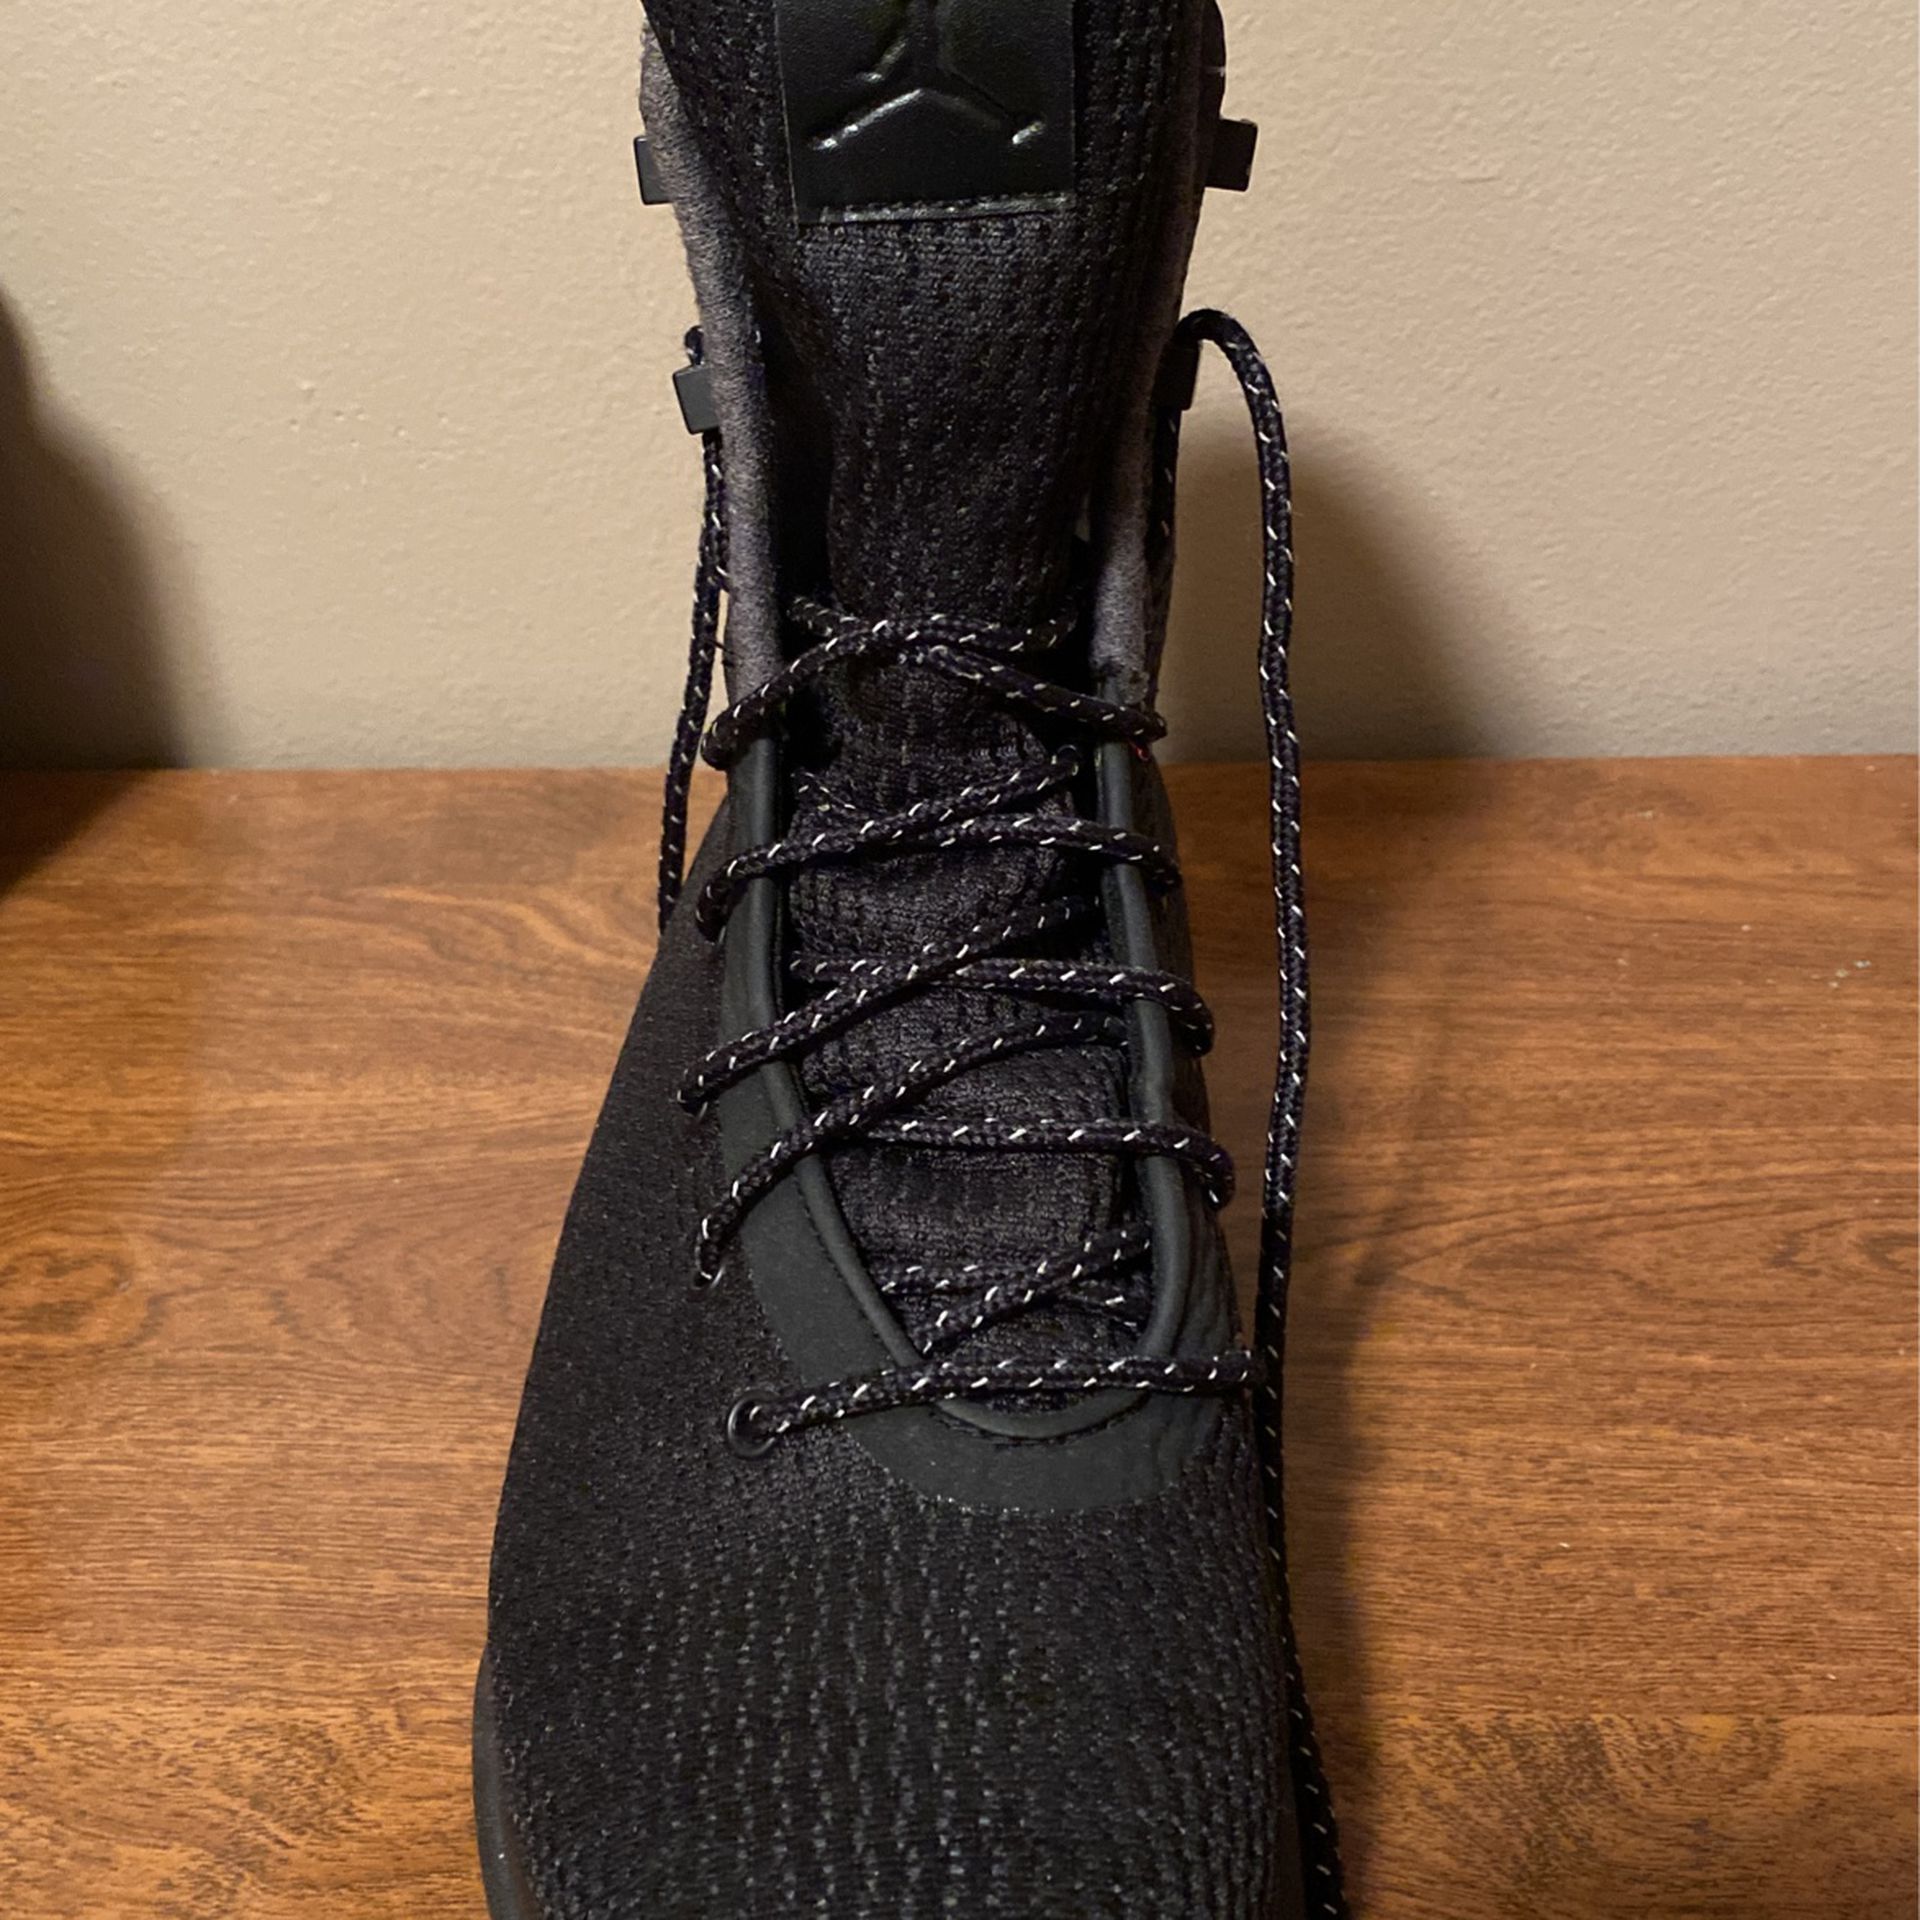 Jordan Future Boots (Black)